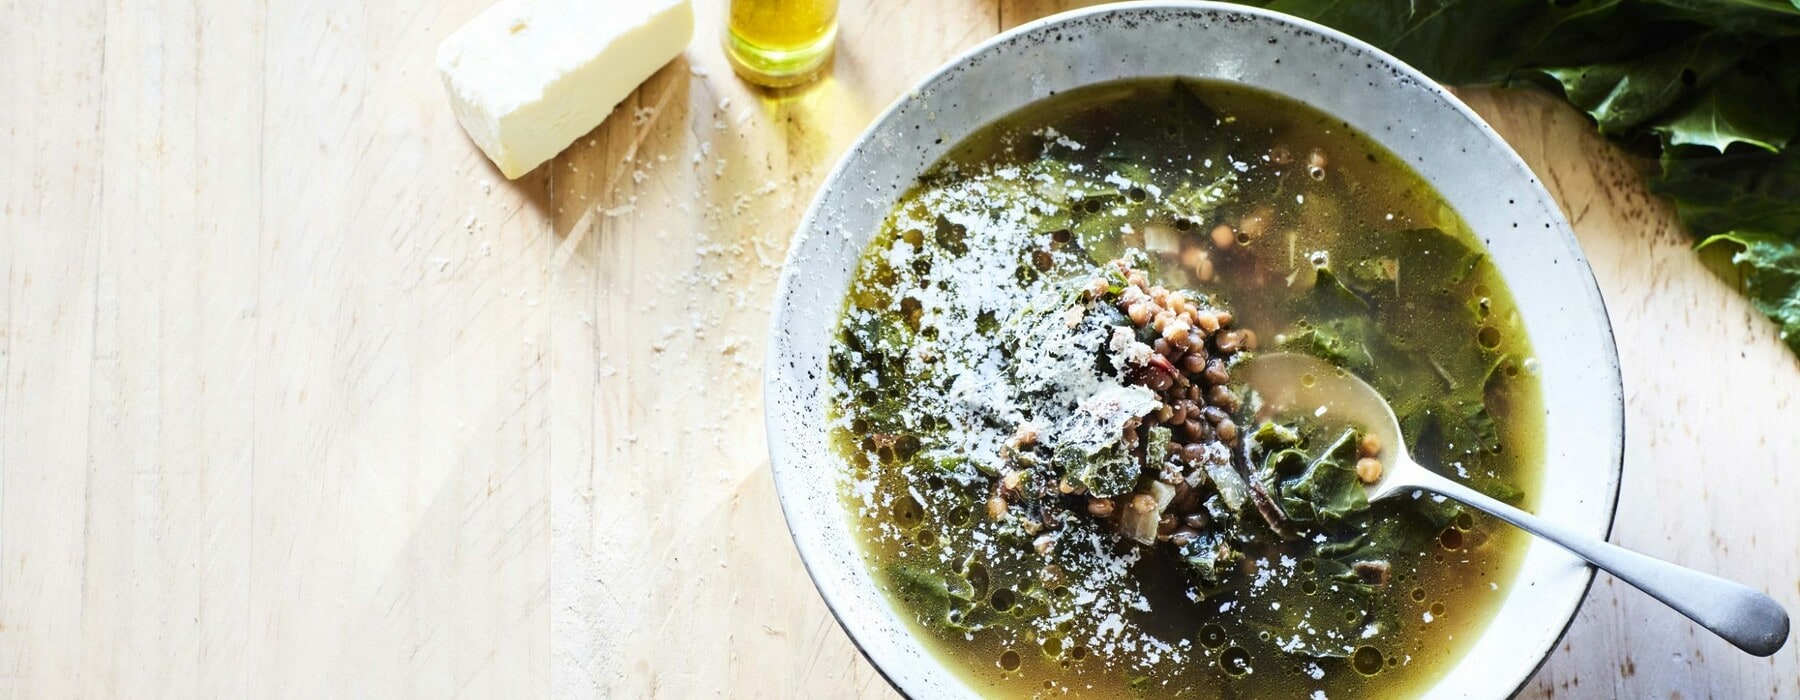 Greens, garlic, lemon and lentil soup in a bowl